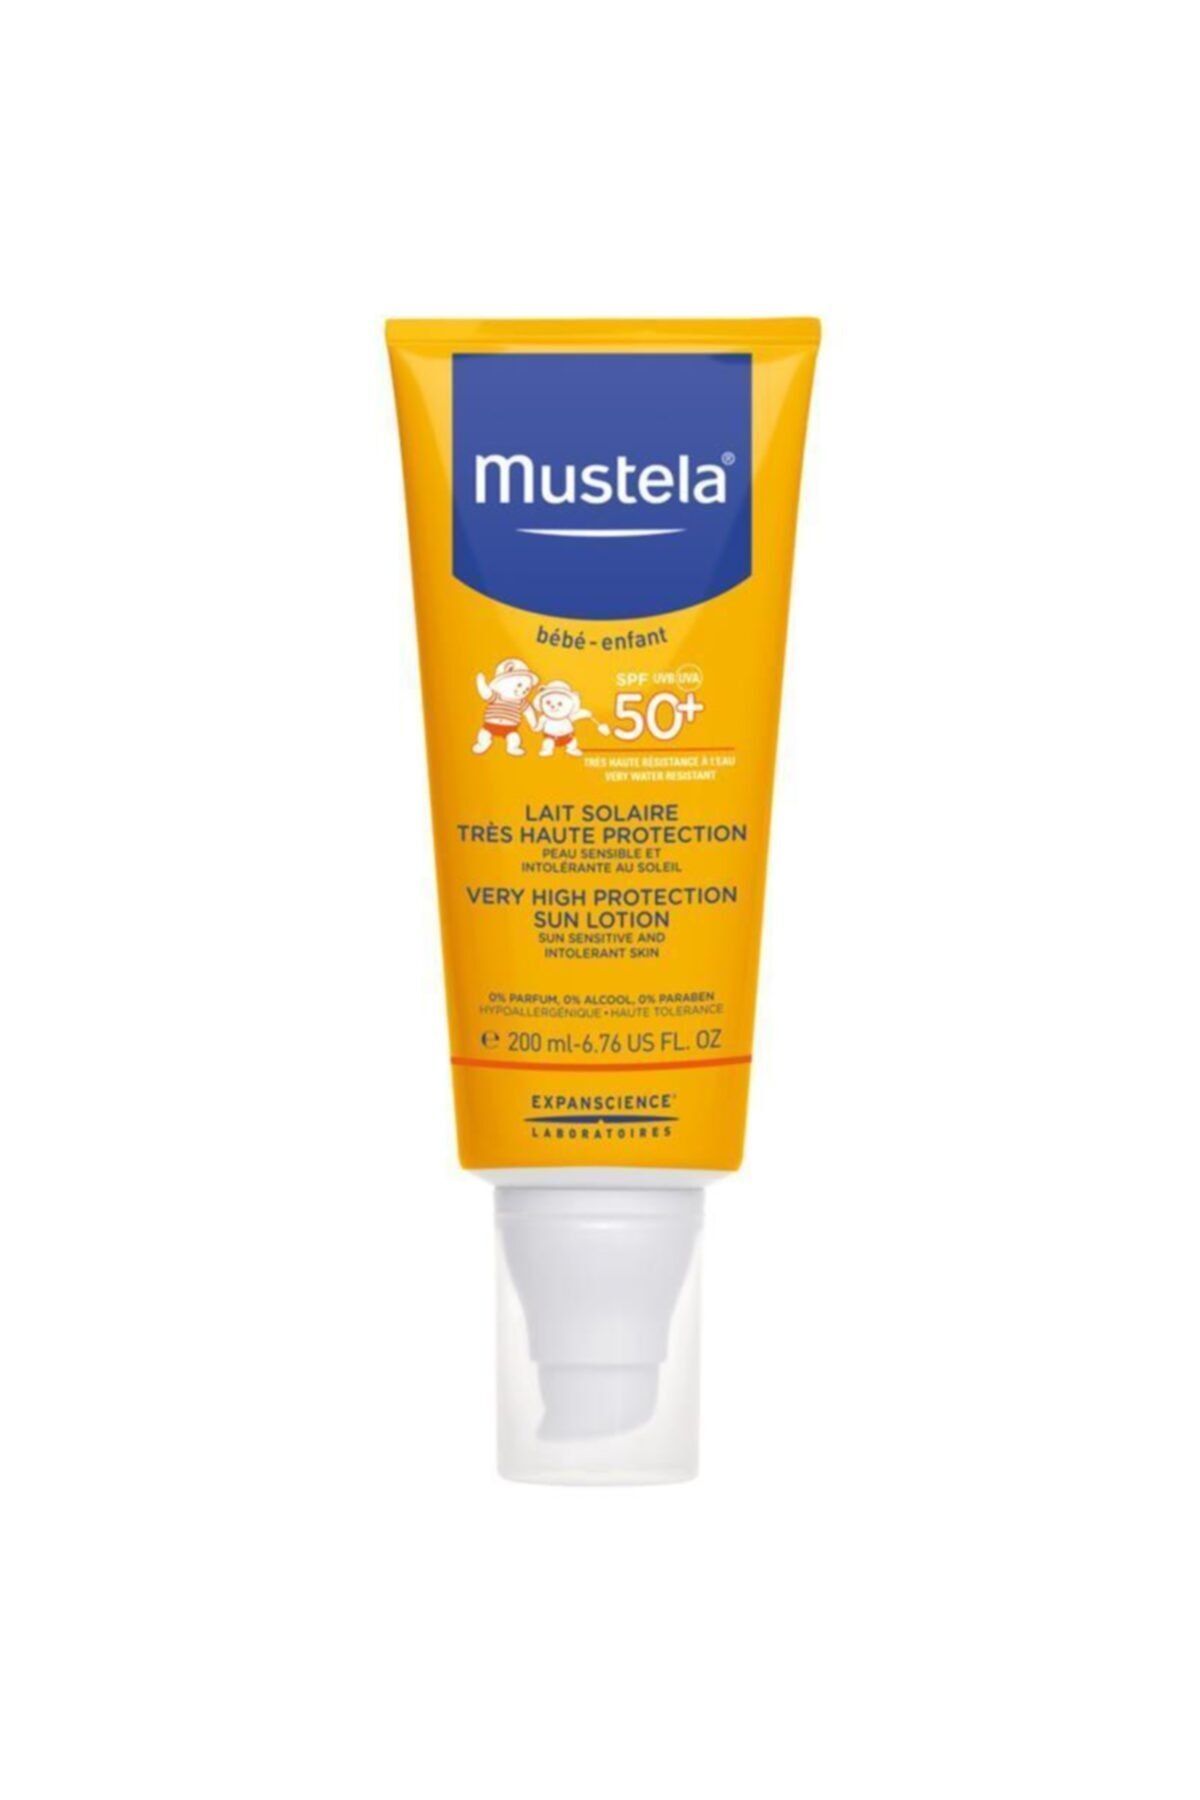 Mustela Very High Protection Sun Lotion Spf50+ 200 ml